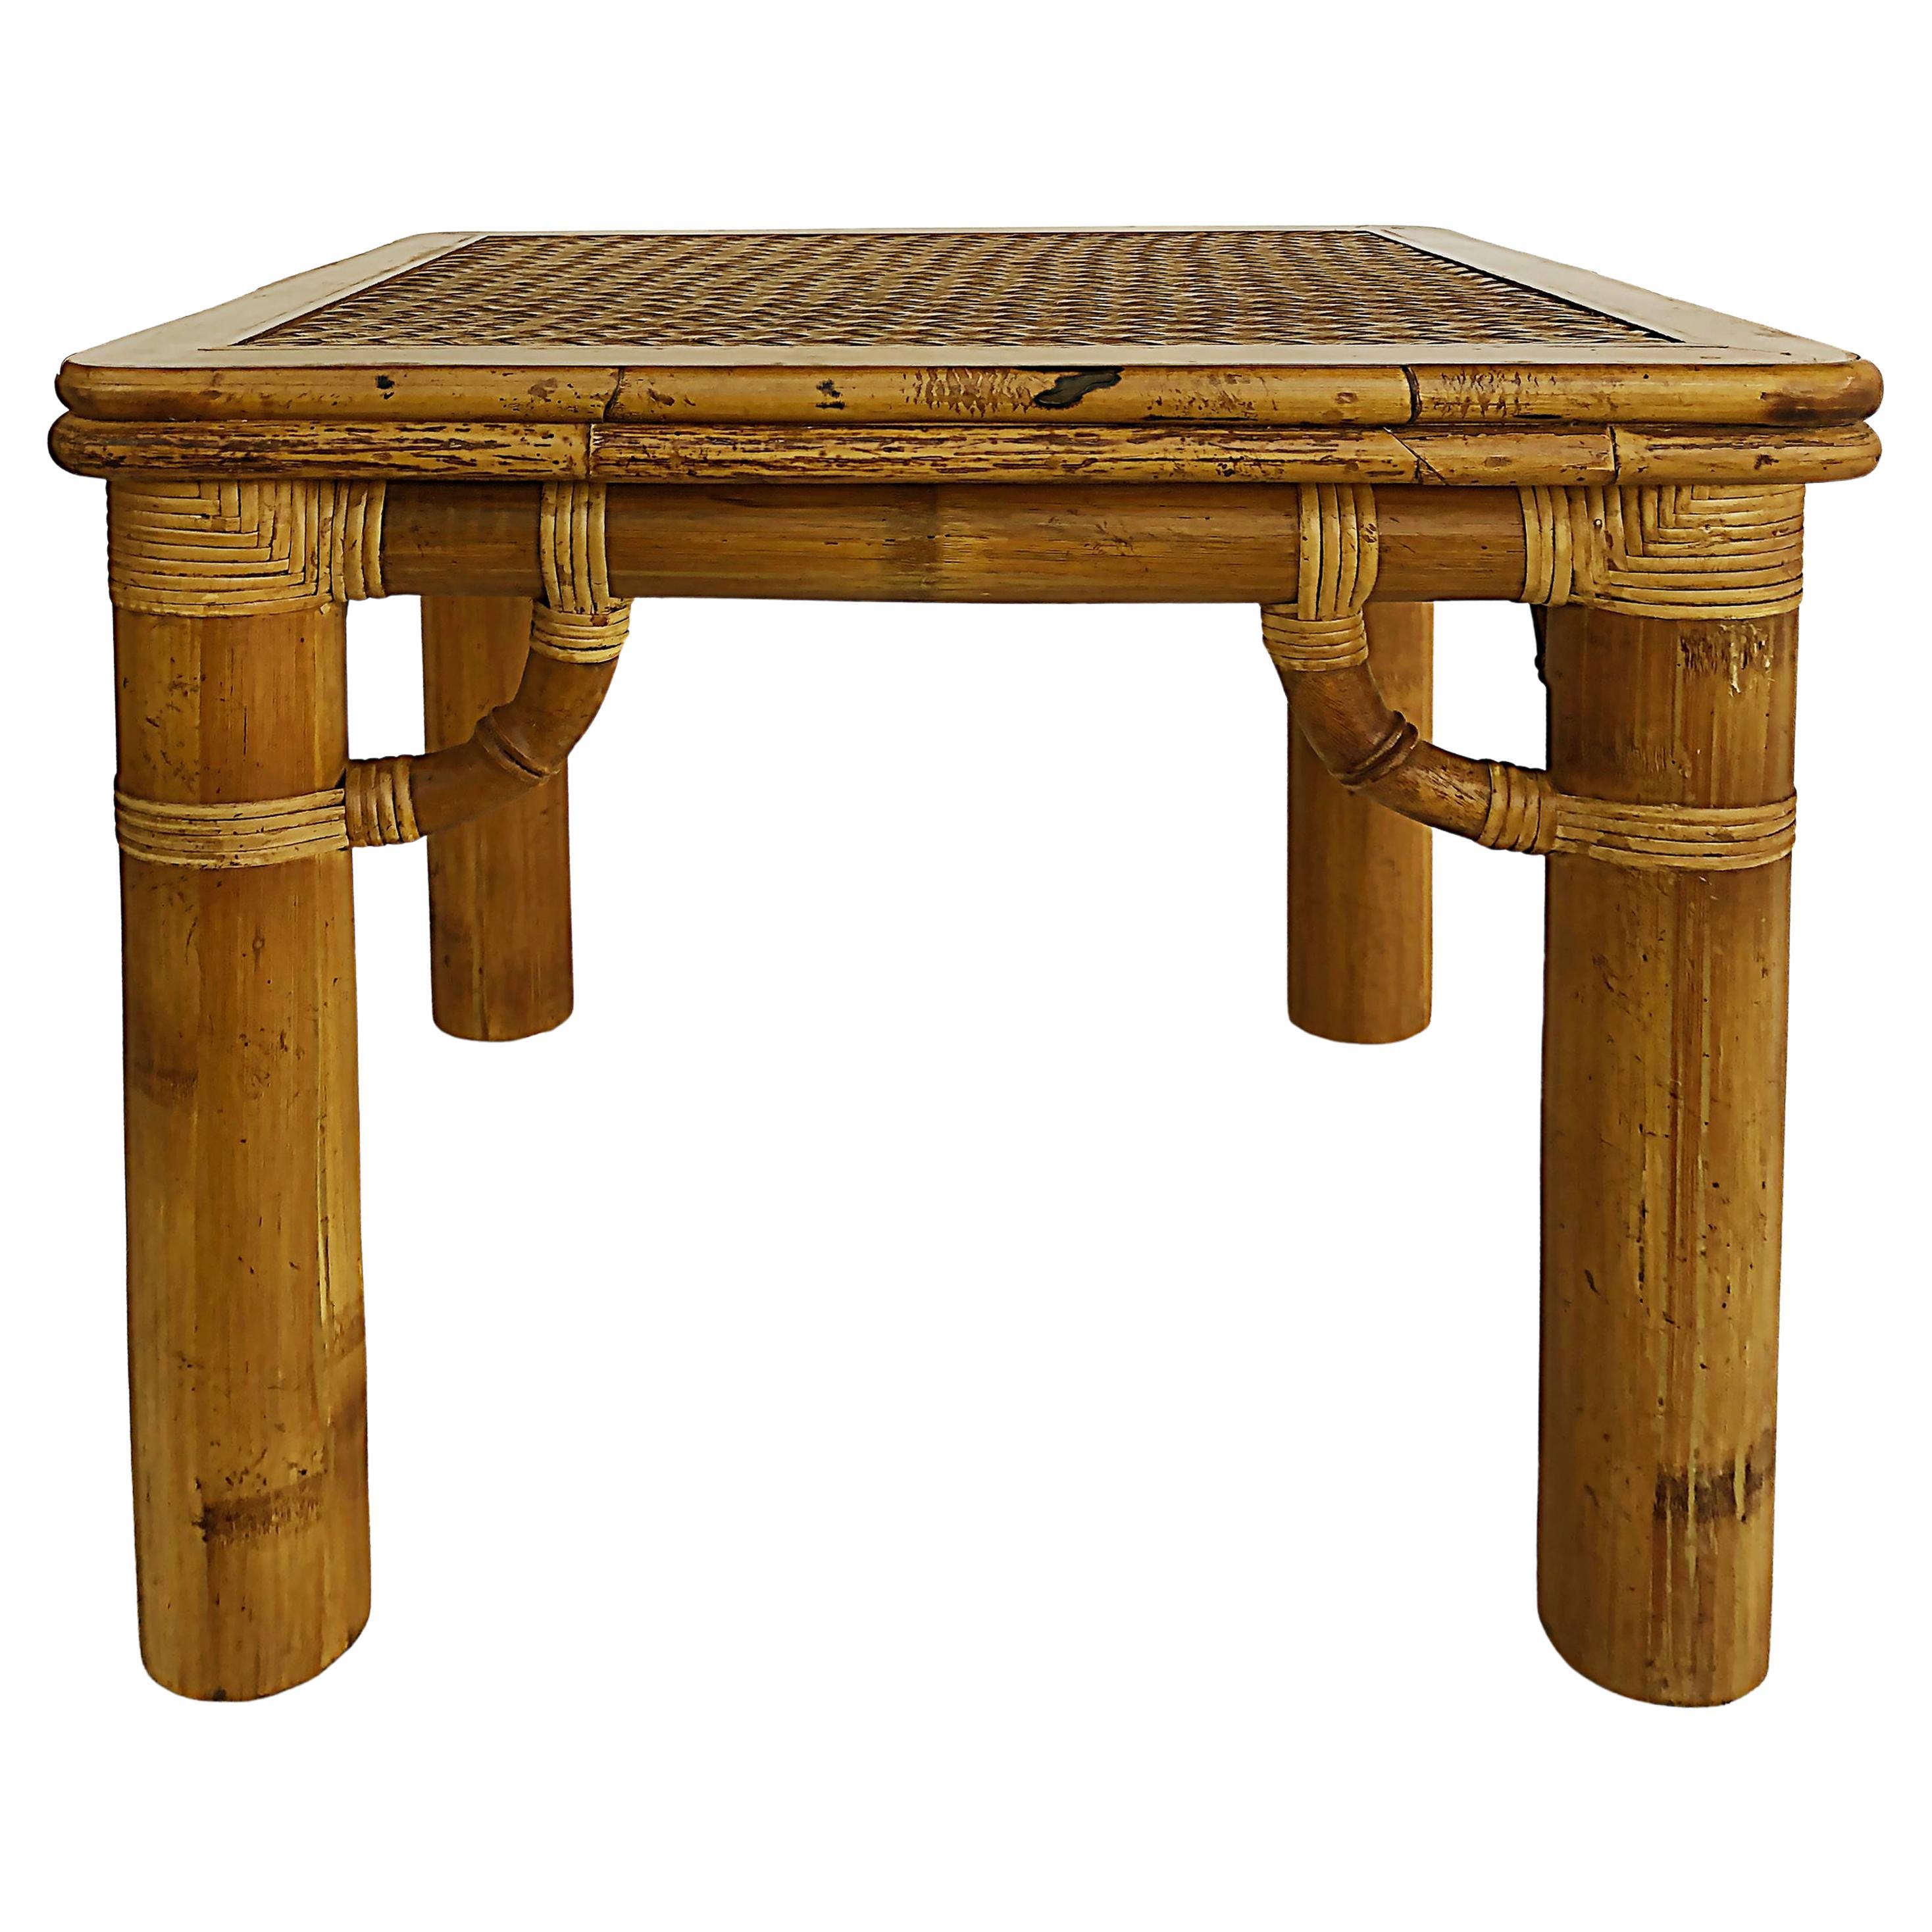 Tavolino in bambù, rattan e canna, attribuito a Maitland Smith